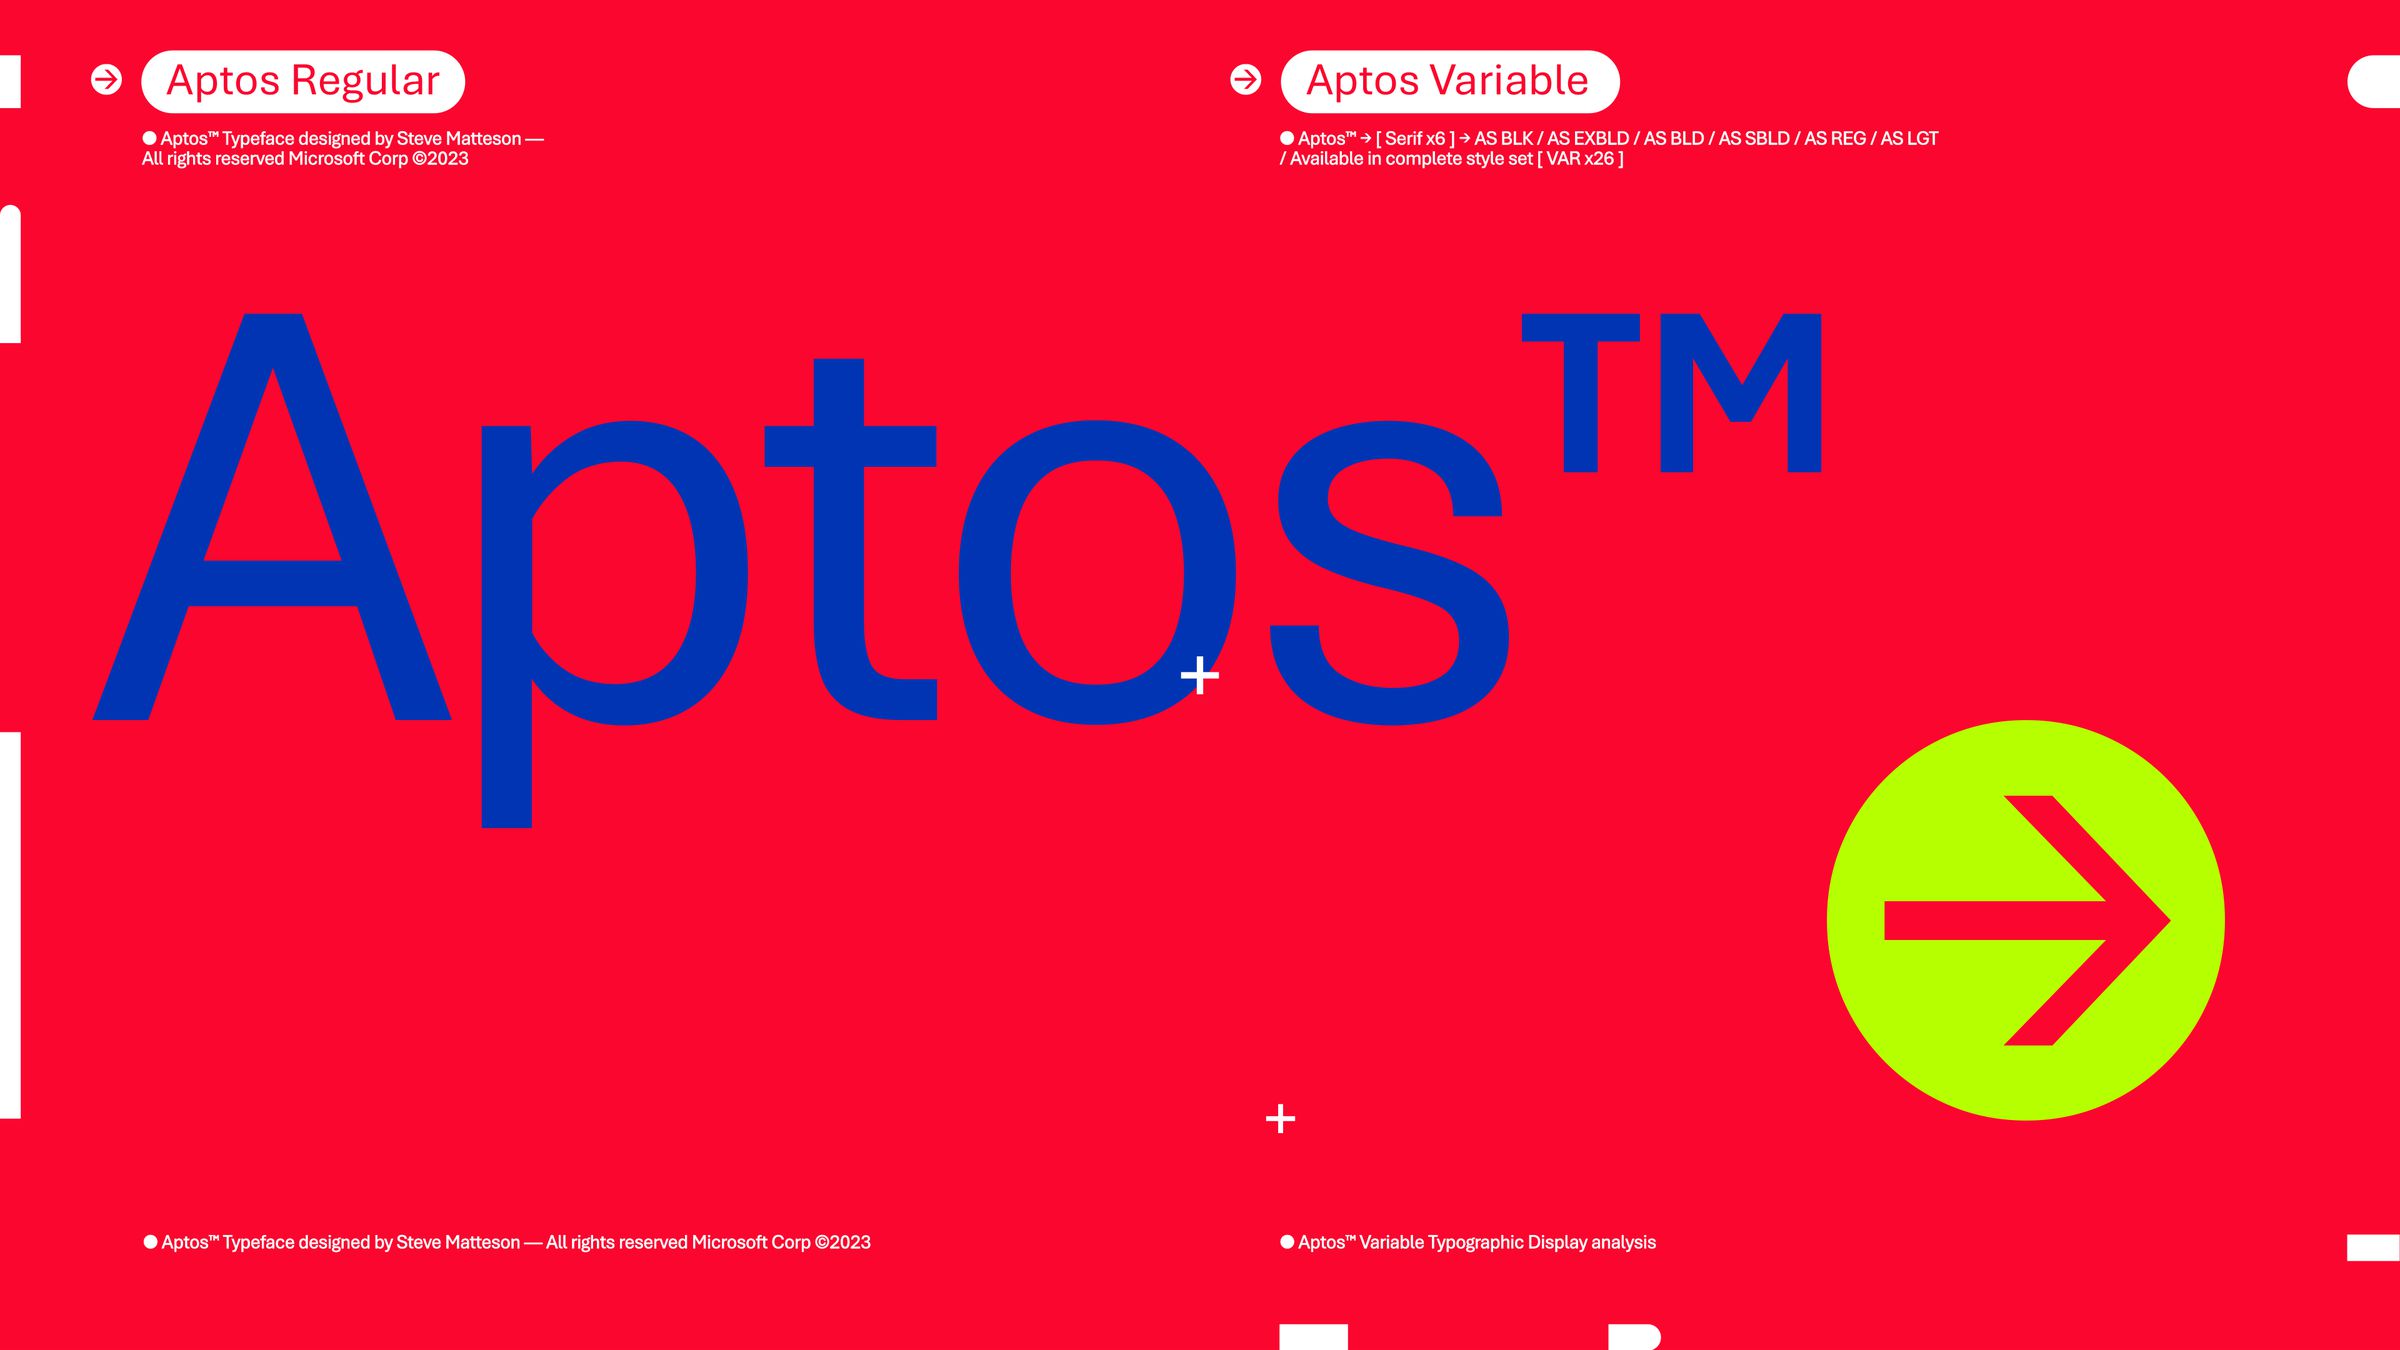 Illustration of Microsoft’s Aptos font